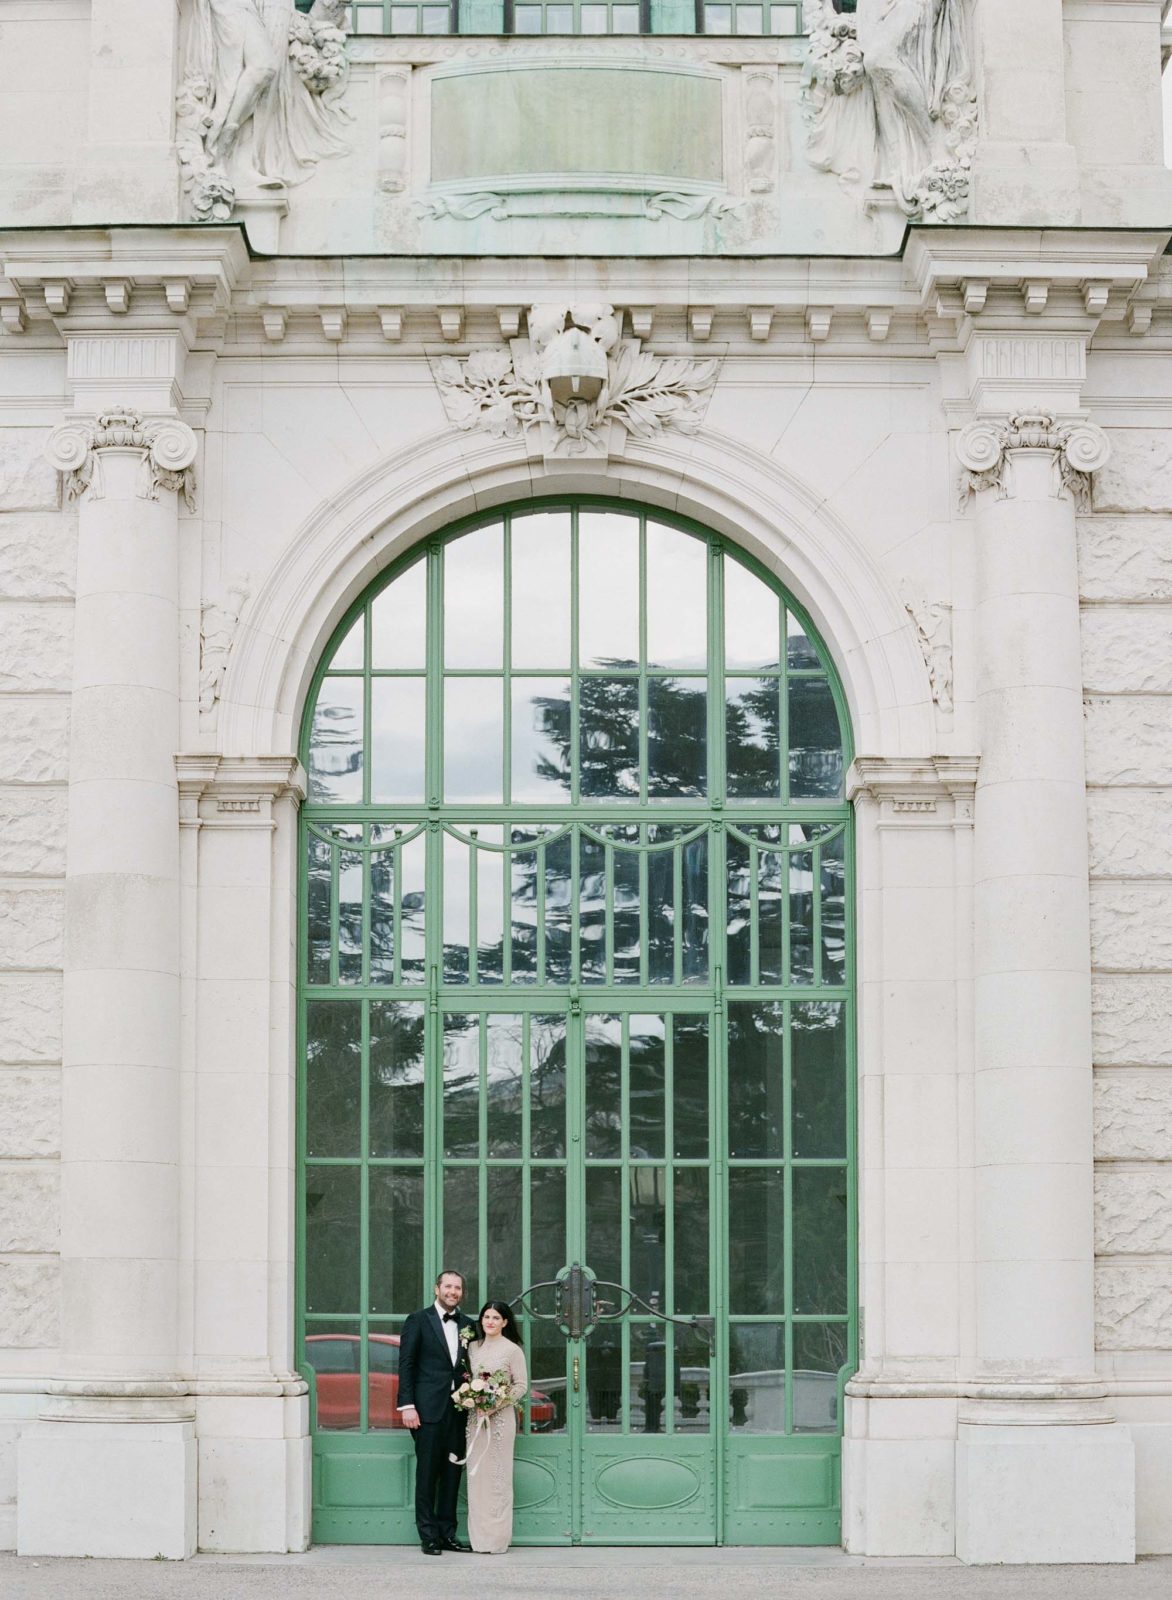 Vienna Wedding Photographer | Austria Destination Wedding | Molly Carr Photography